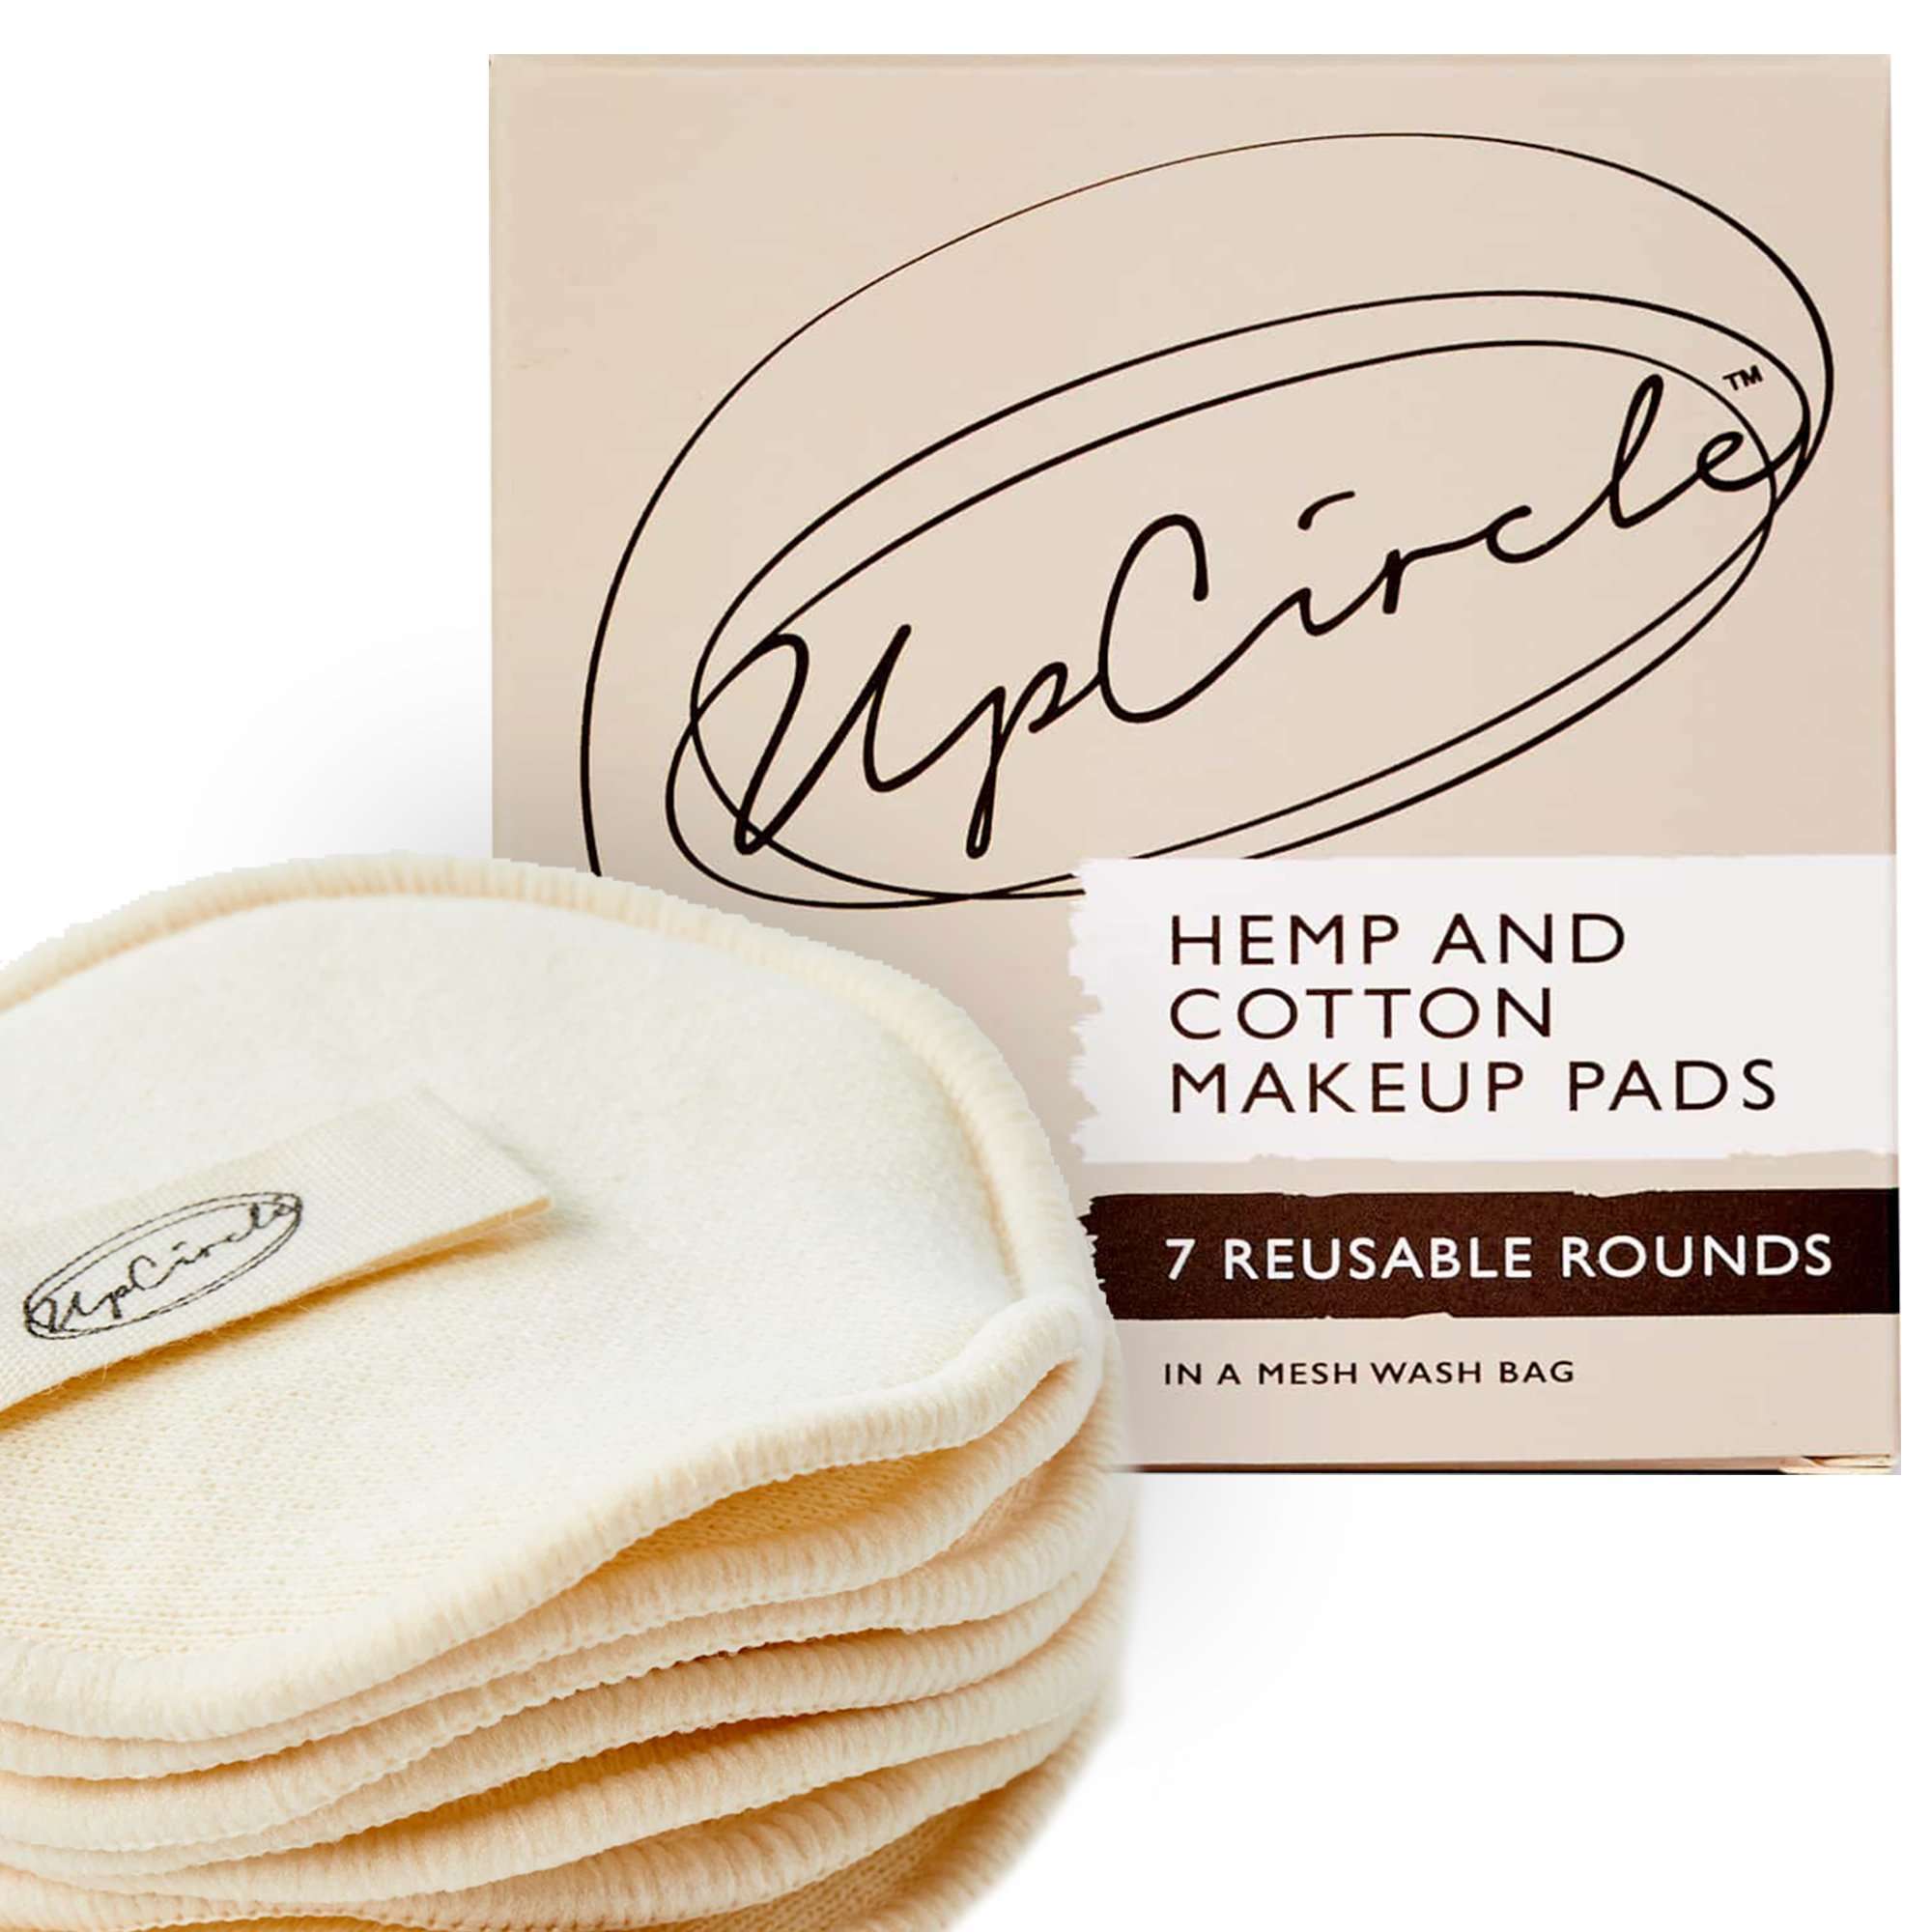 UpCircle Beauty Hemp & Cotton Reusable Pads at Socialite Beauty Canada